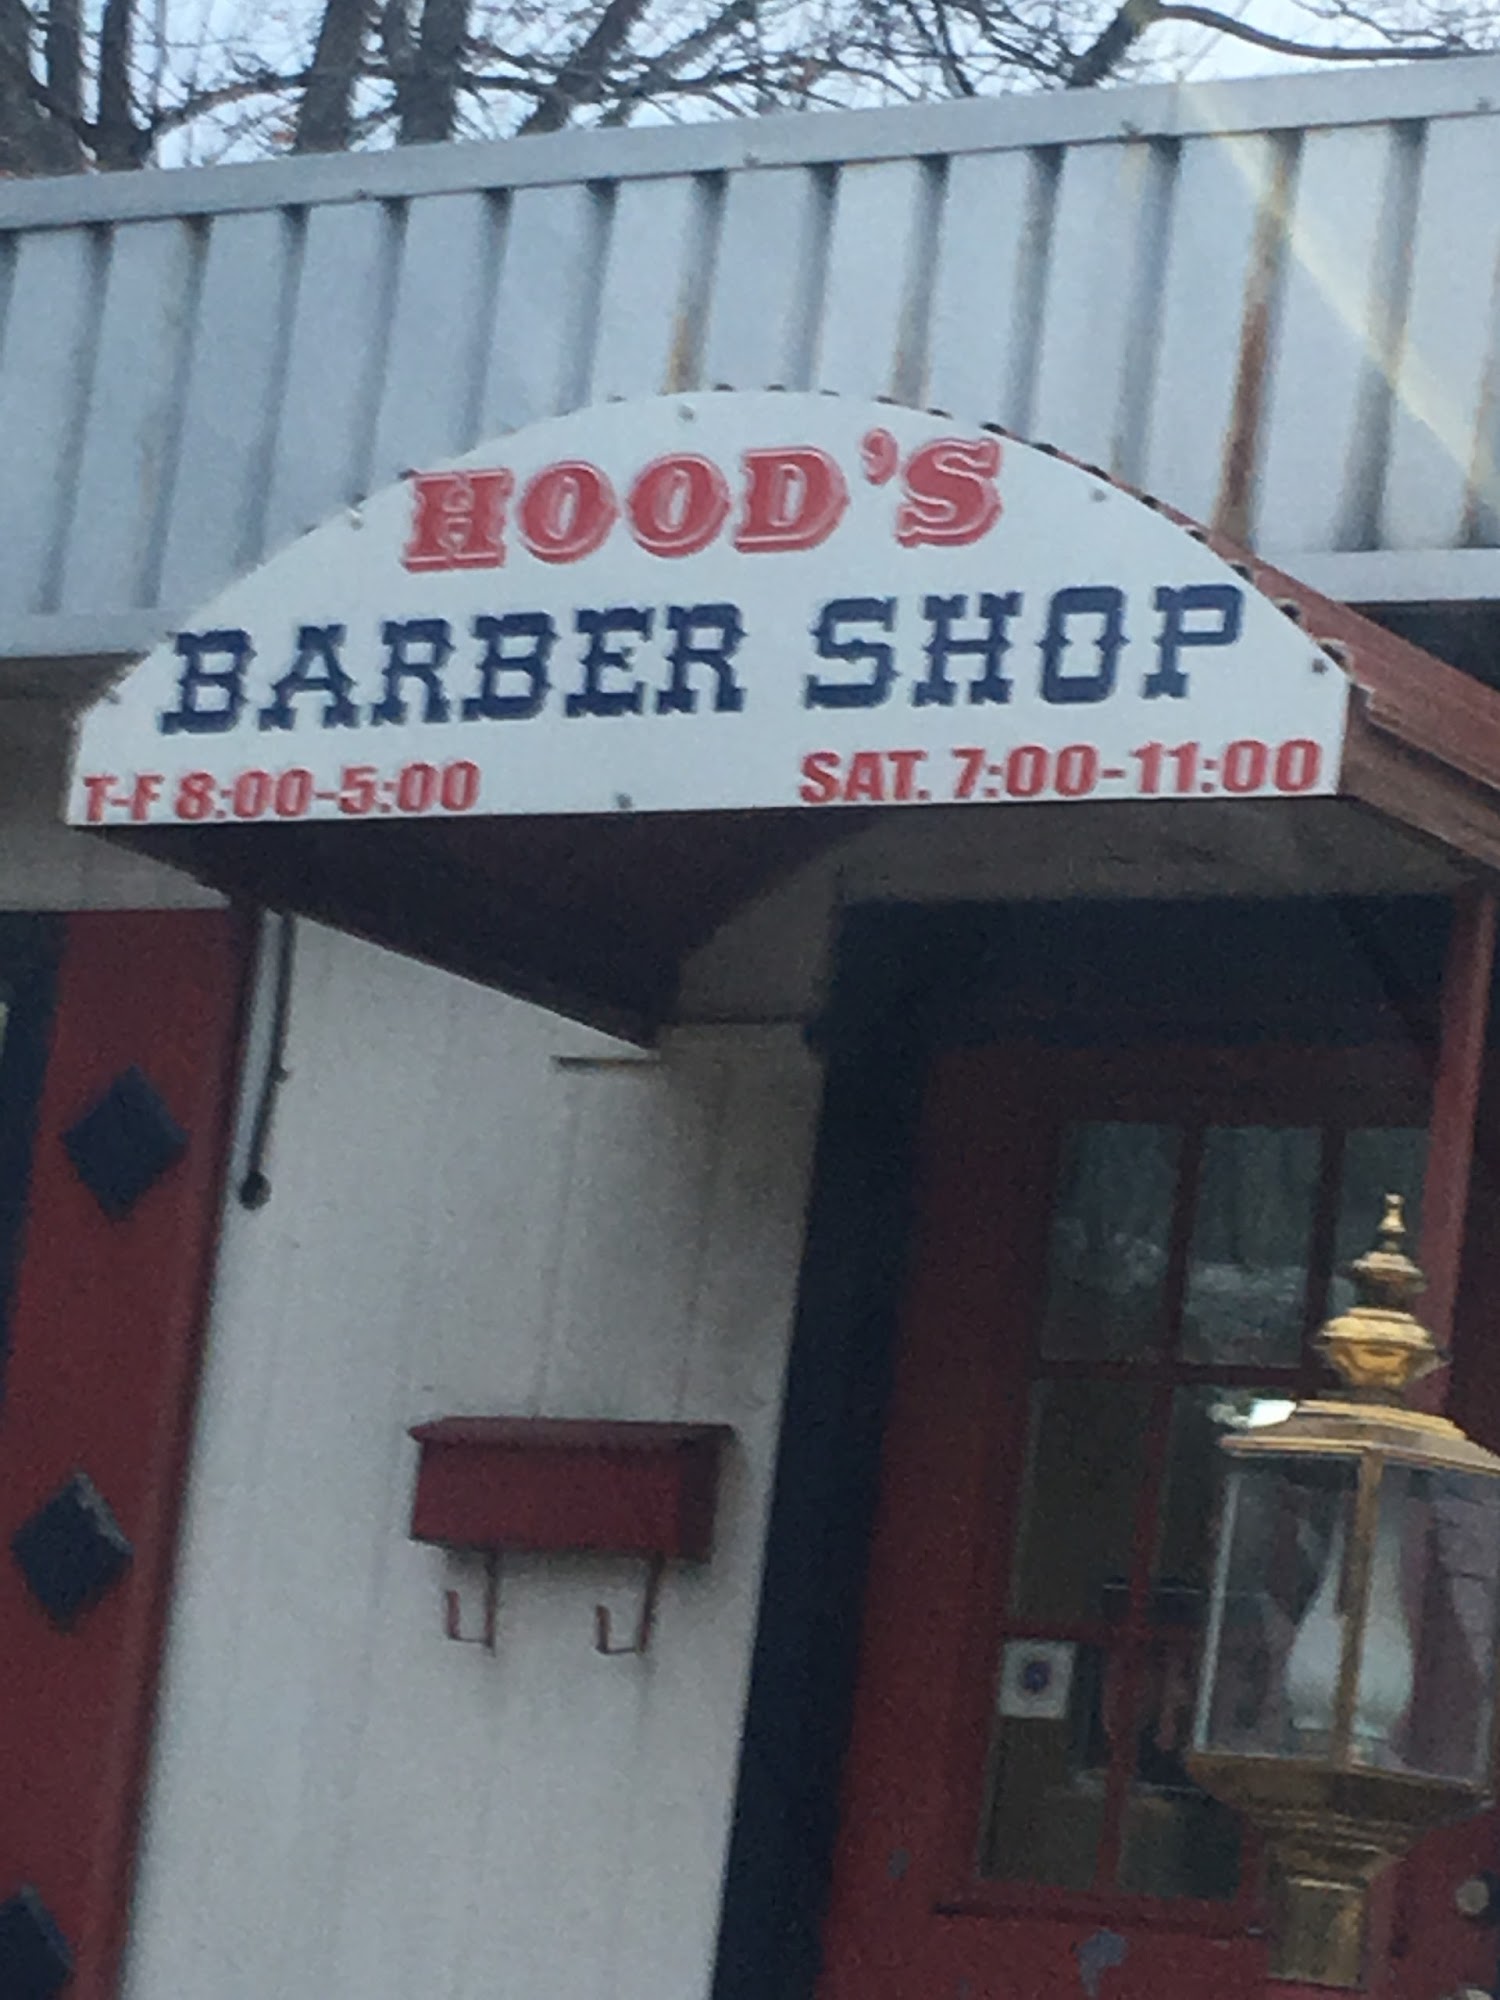 Hood's Barber Shop